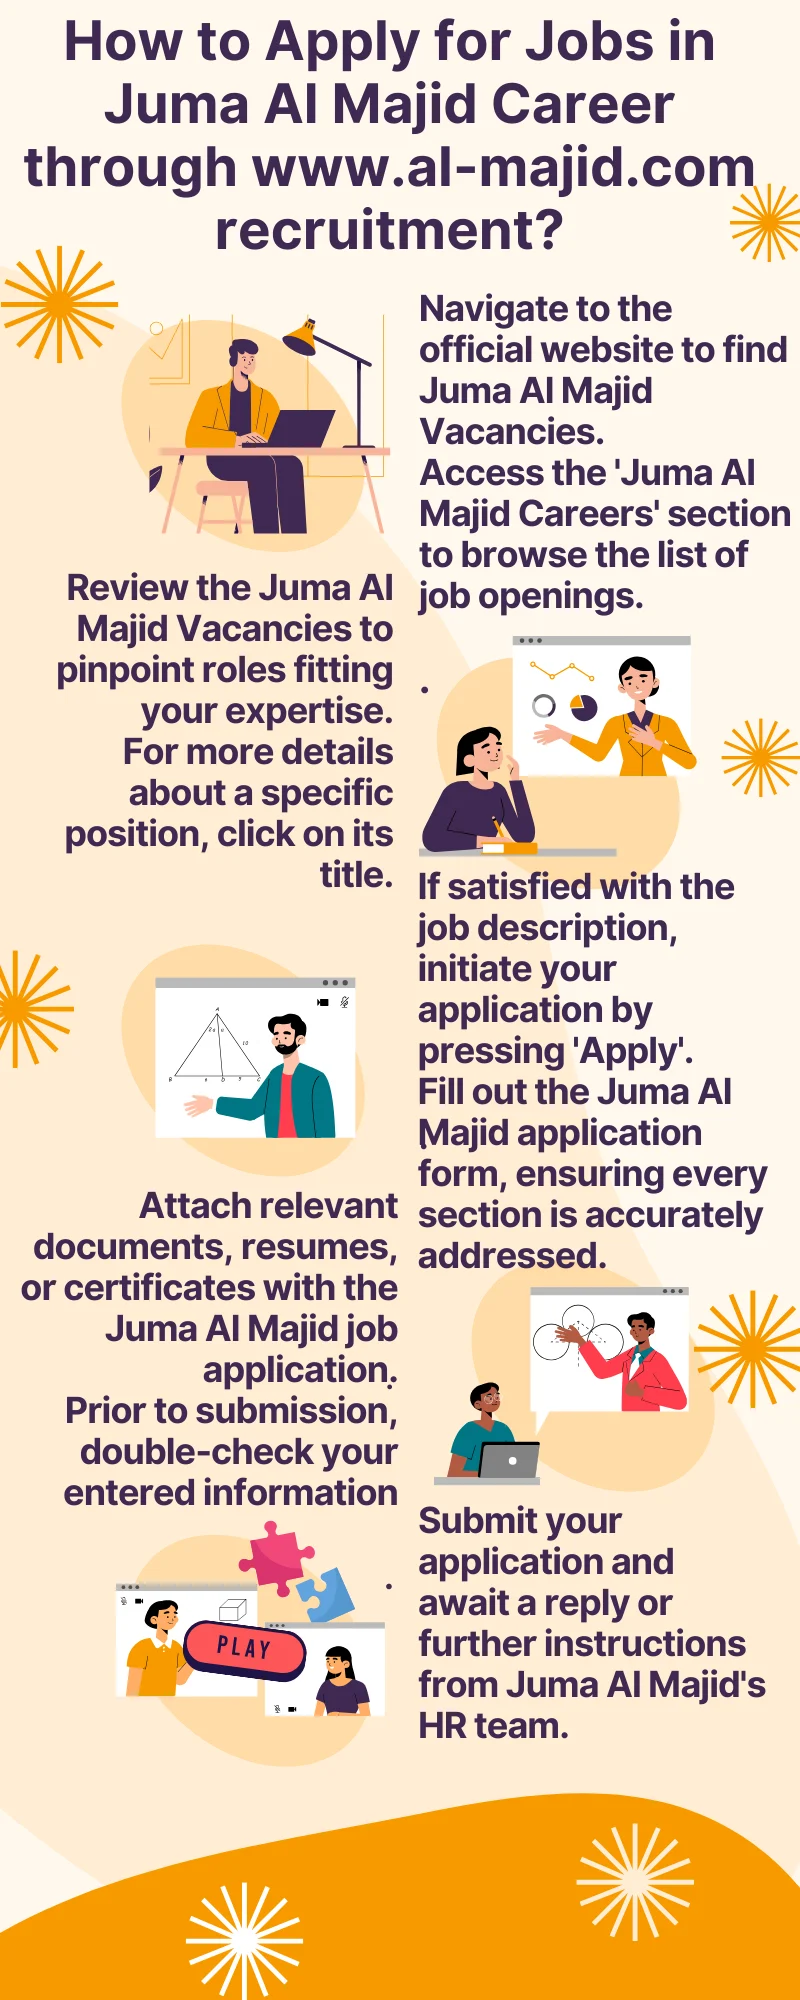 How to Apply for Jobs in Juma Al Majid Career through www.al-majid.com recruitment?